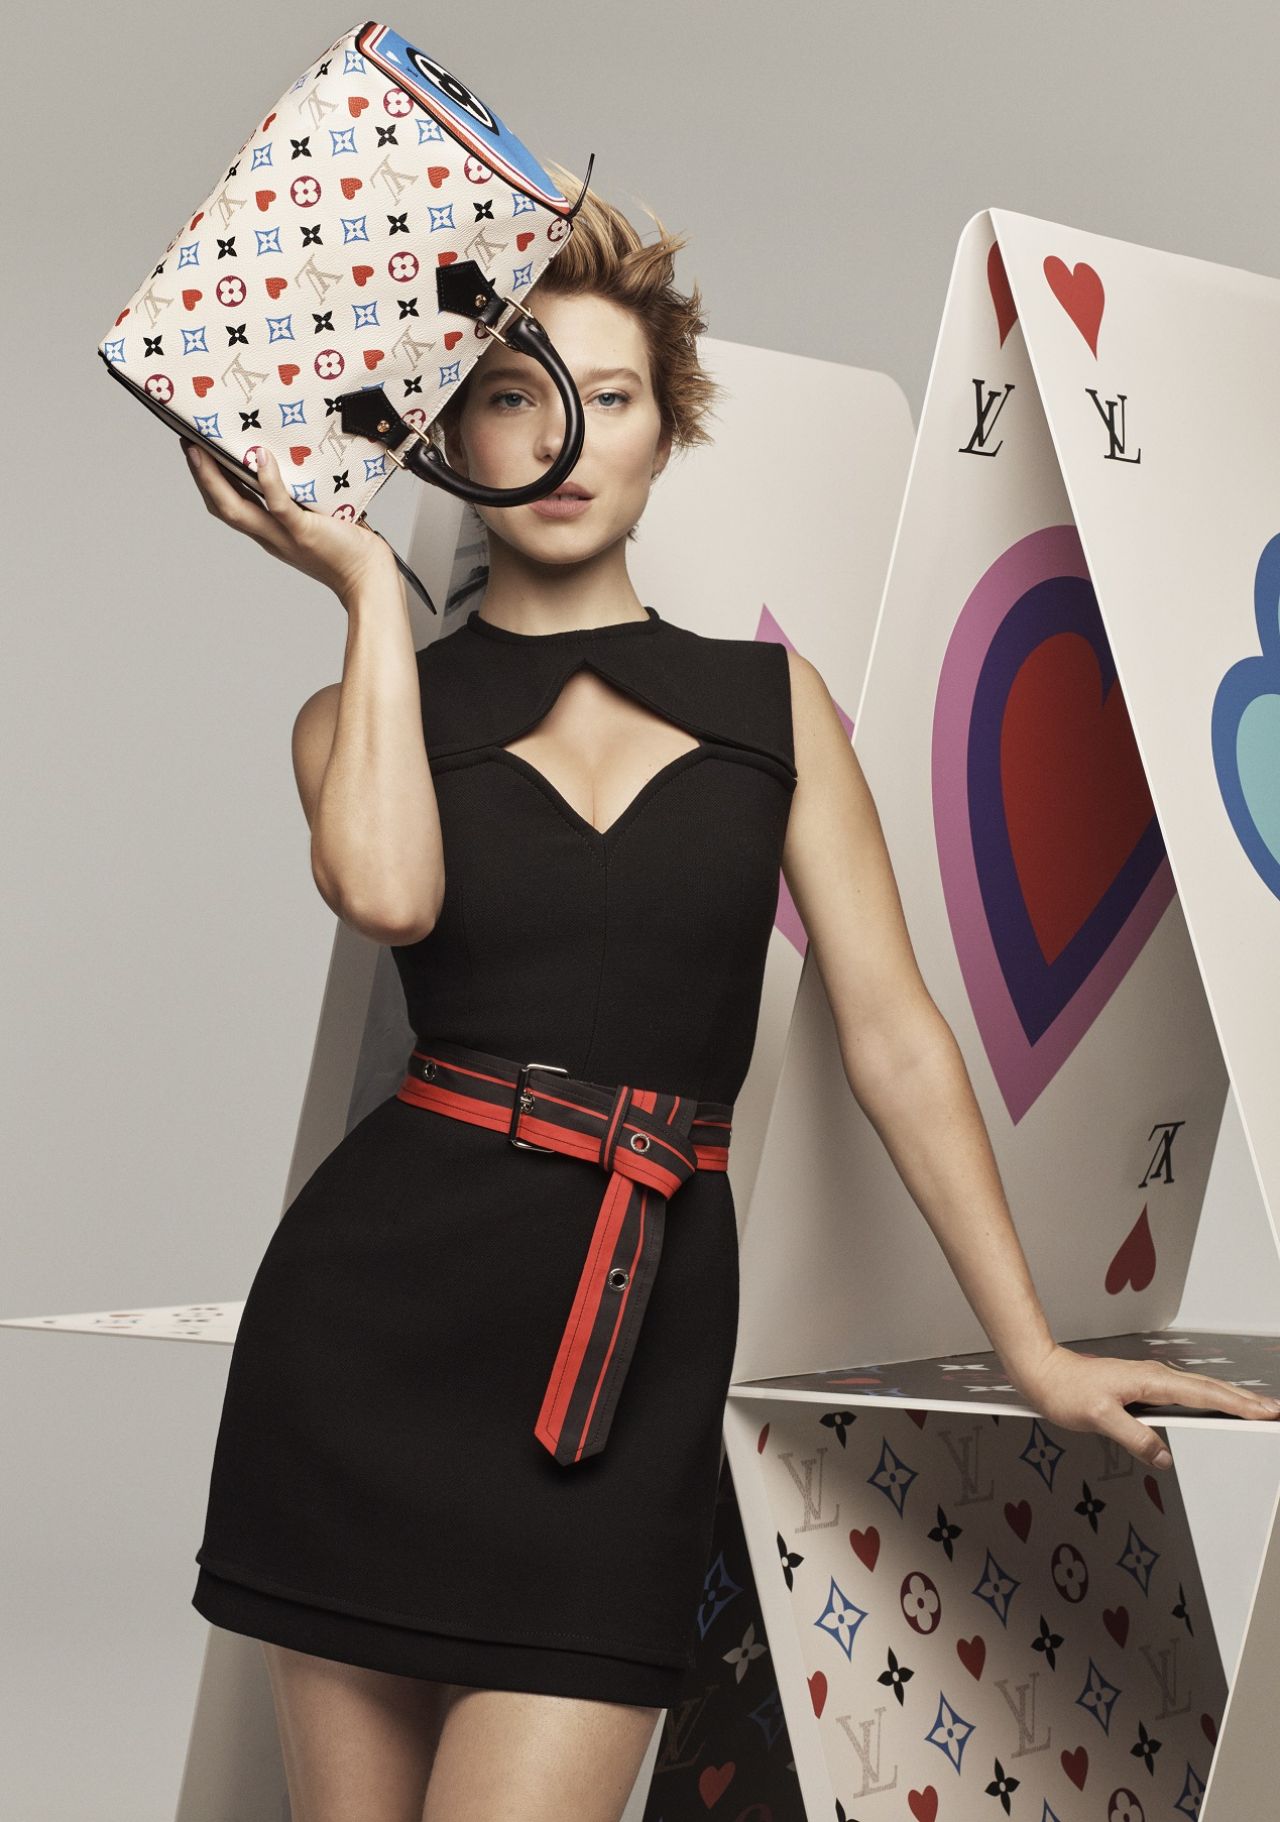 L a Seydoux Photoshoot  for Louis  Vuitton  Cruise 